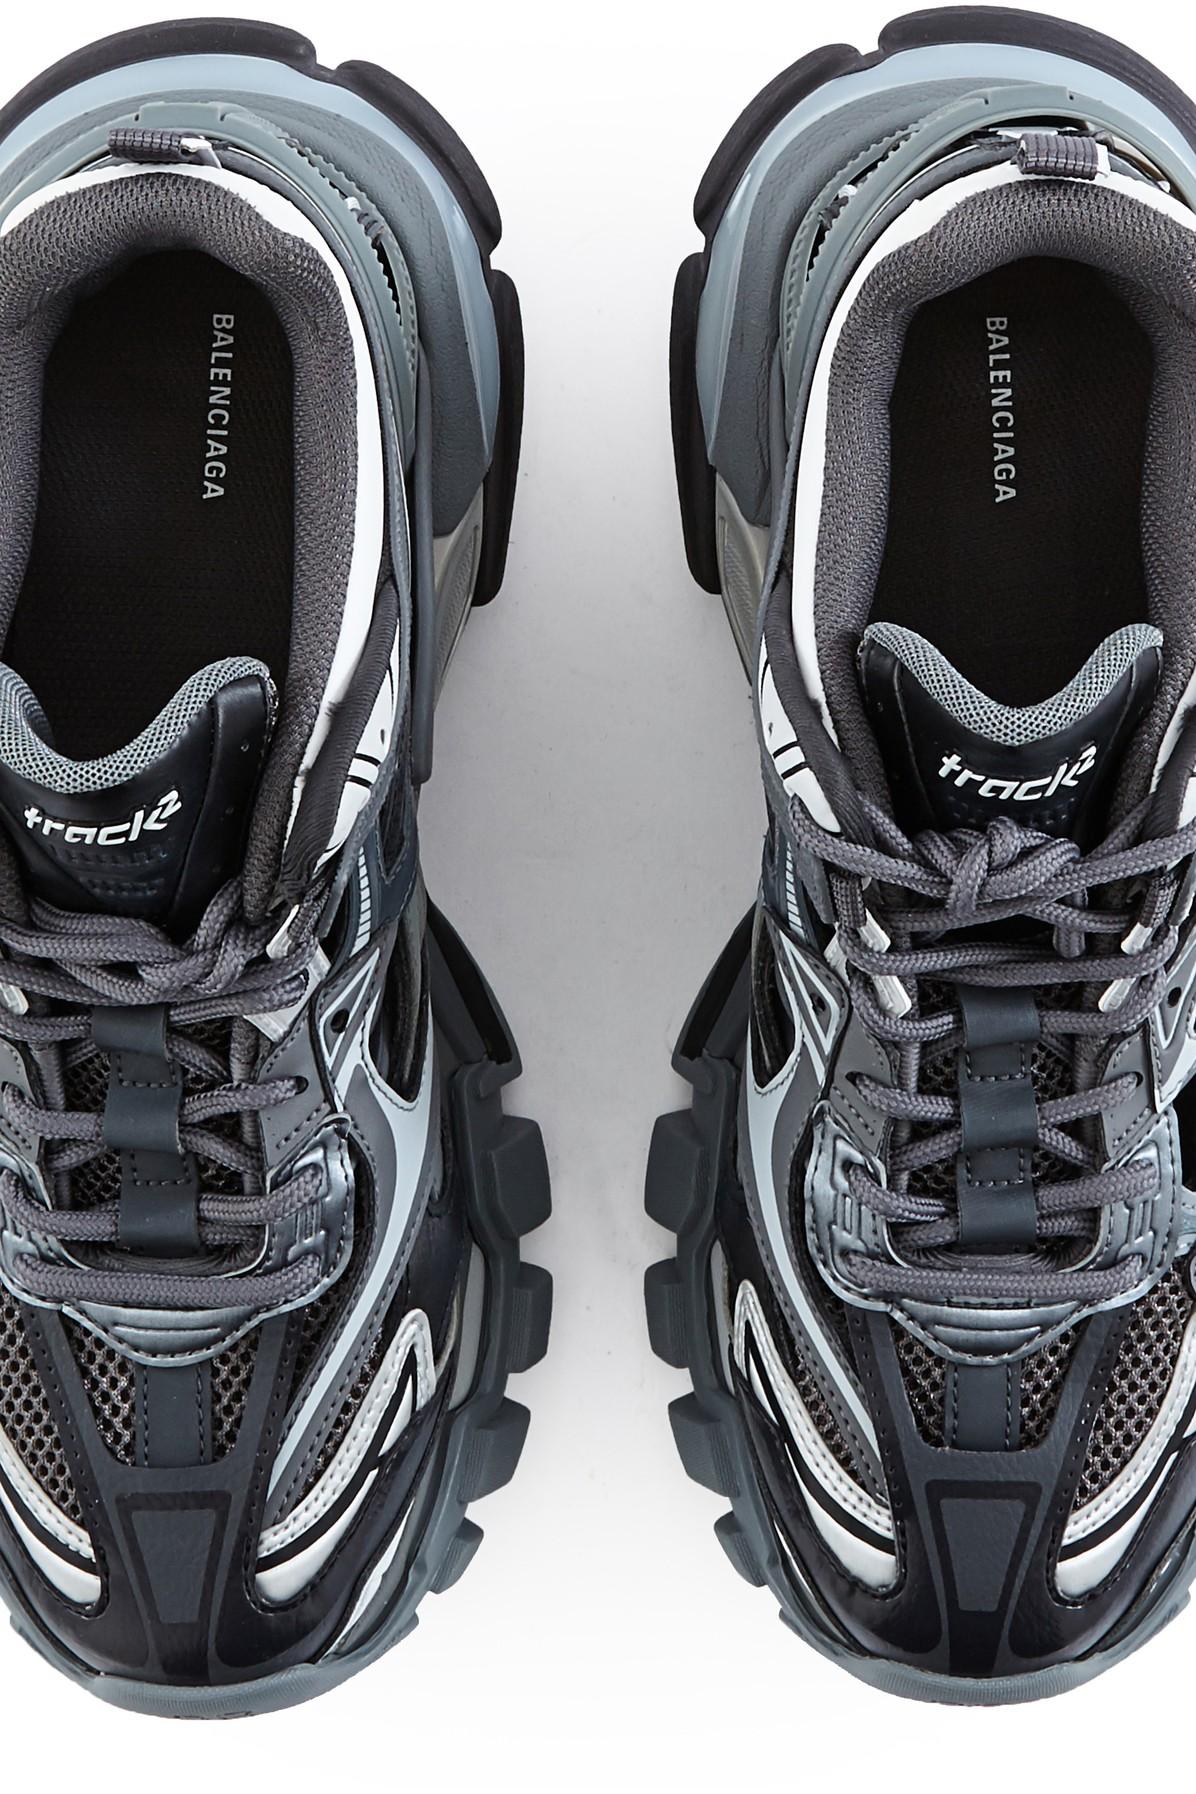 Balenciaga Rubber Track 2 Open Metallic Sneakers in Gray - Lyst